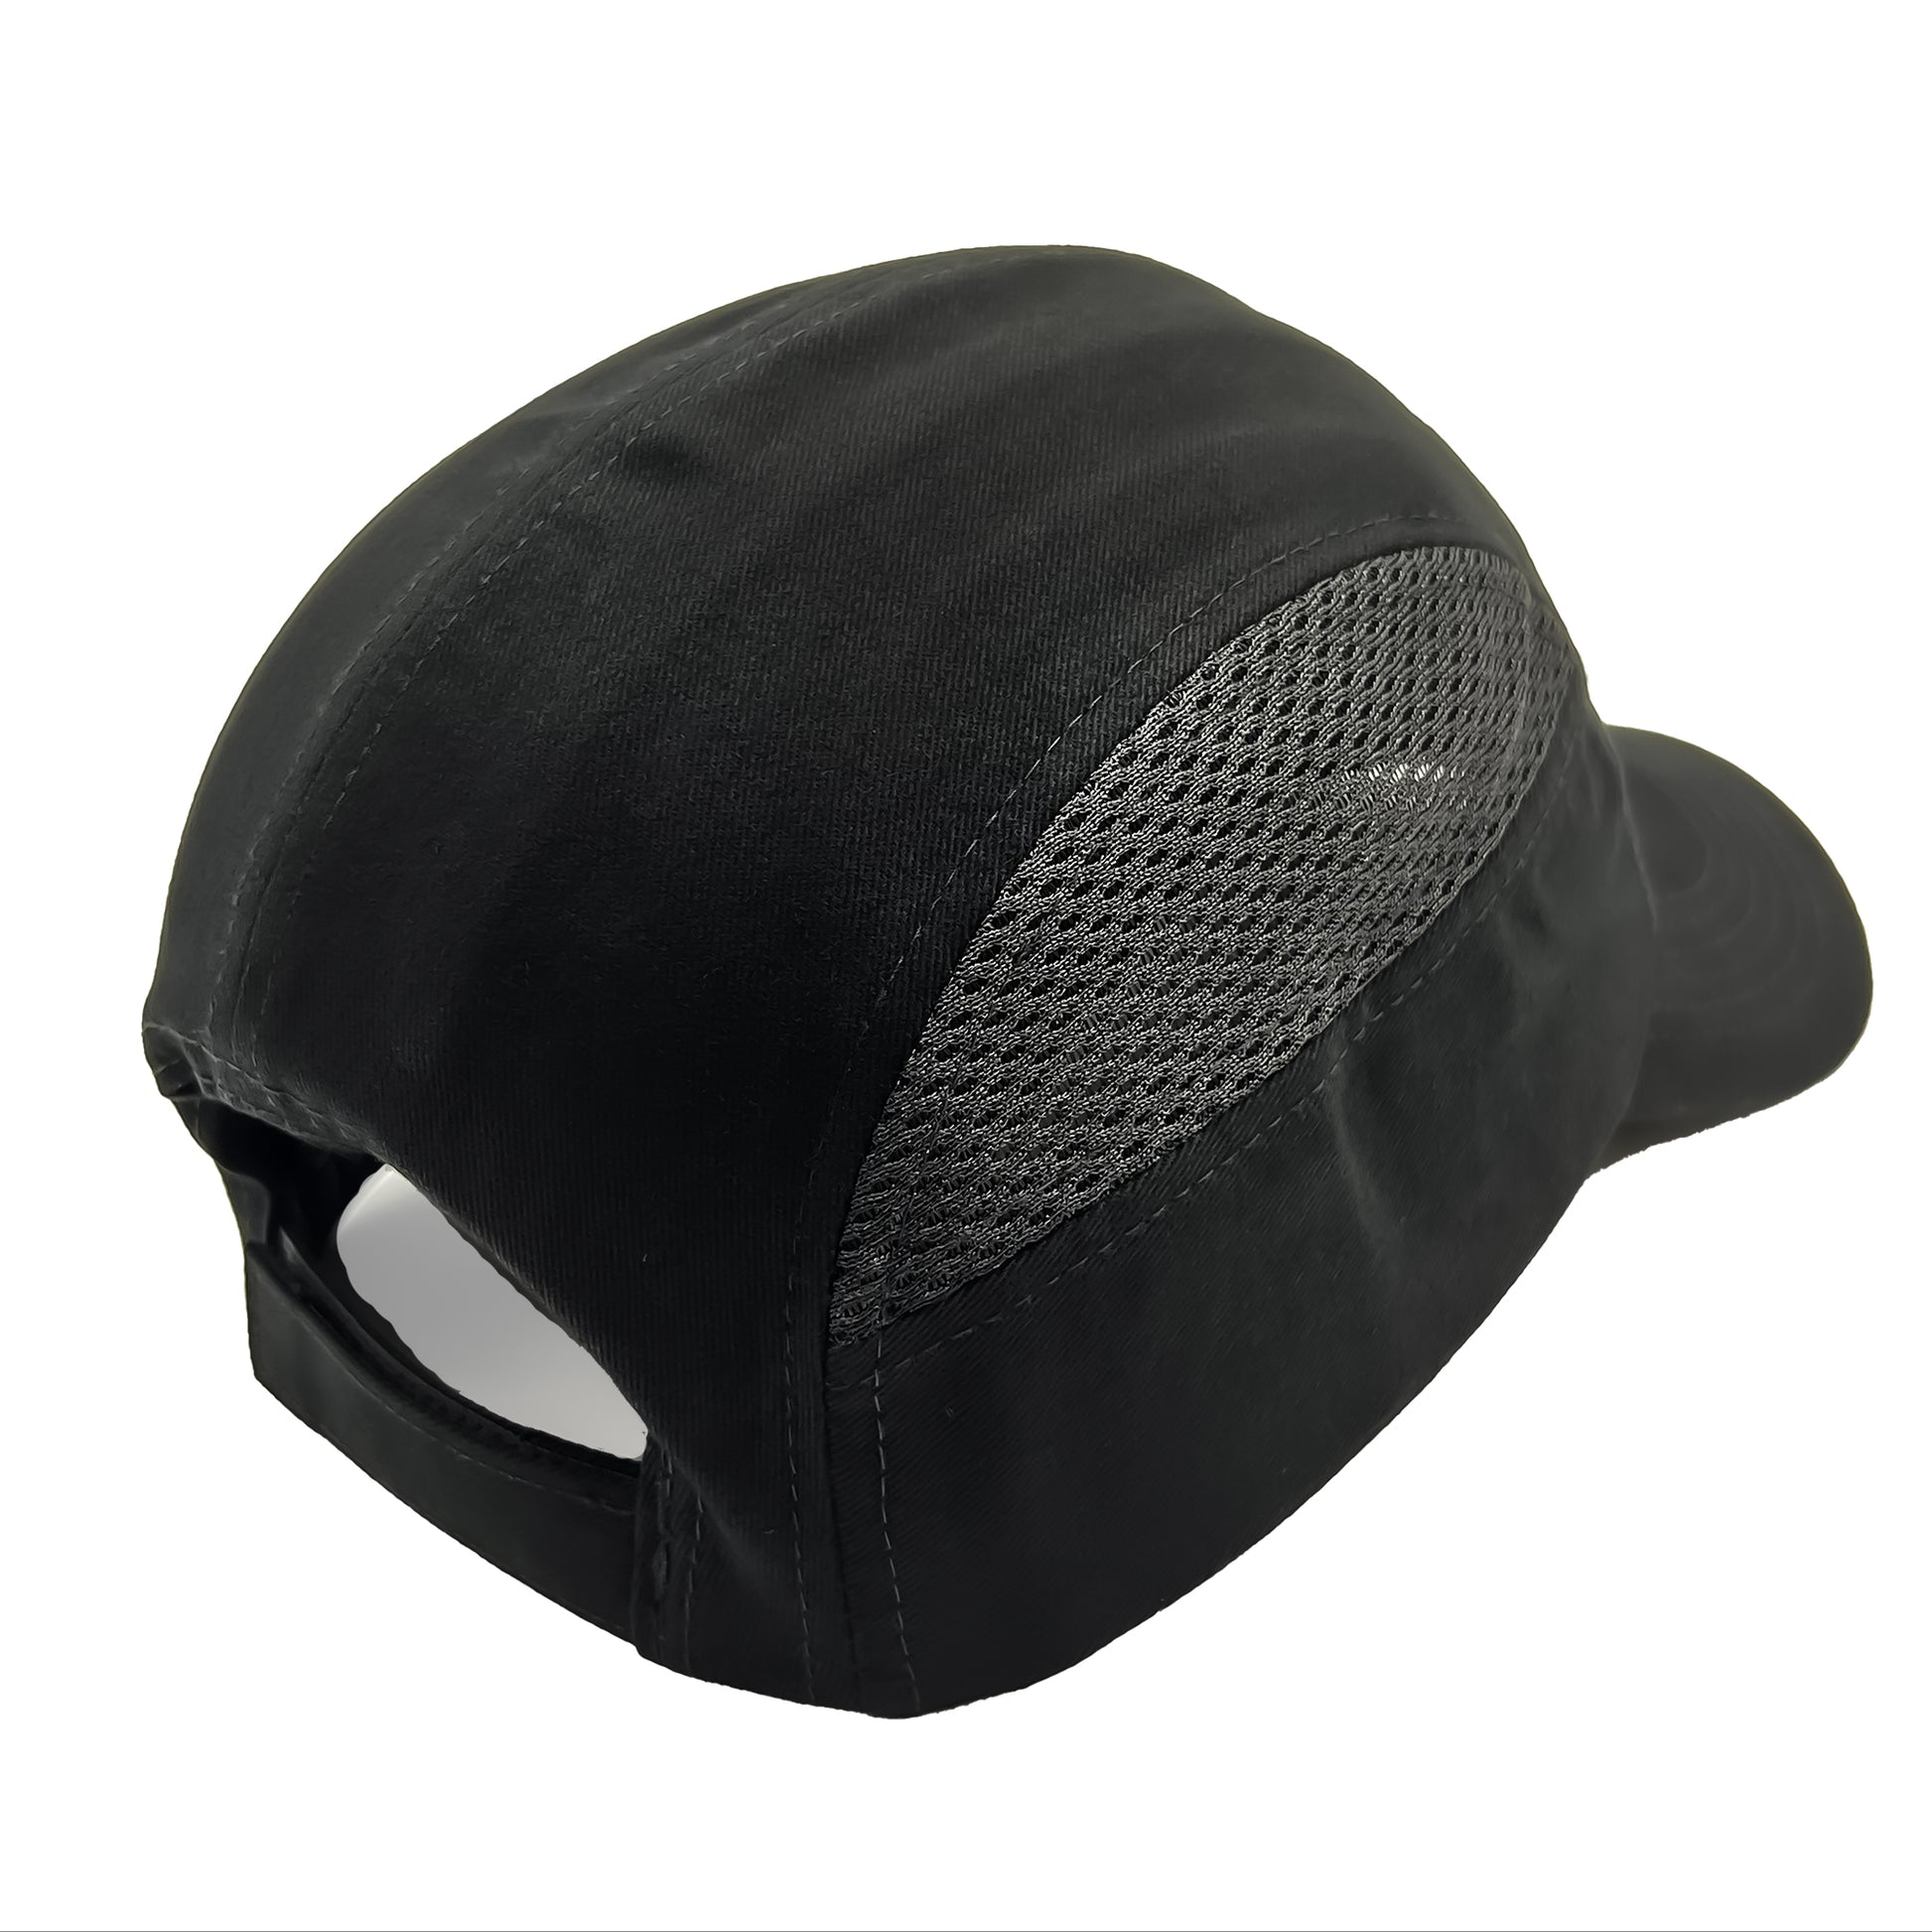 Lucent Path Mesh Black Baseball Safety Bump Cap Helmet Hard Hat Head Protection Cap back view